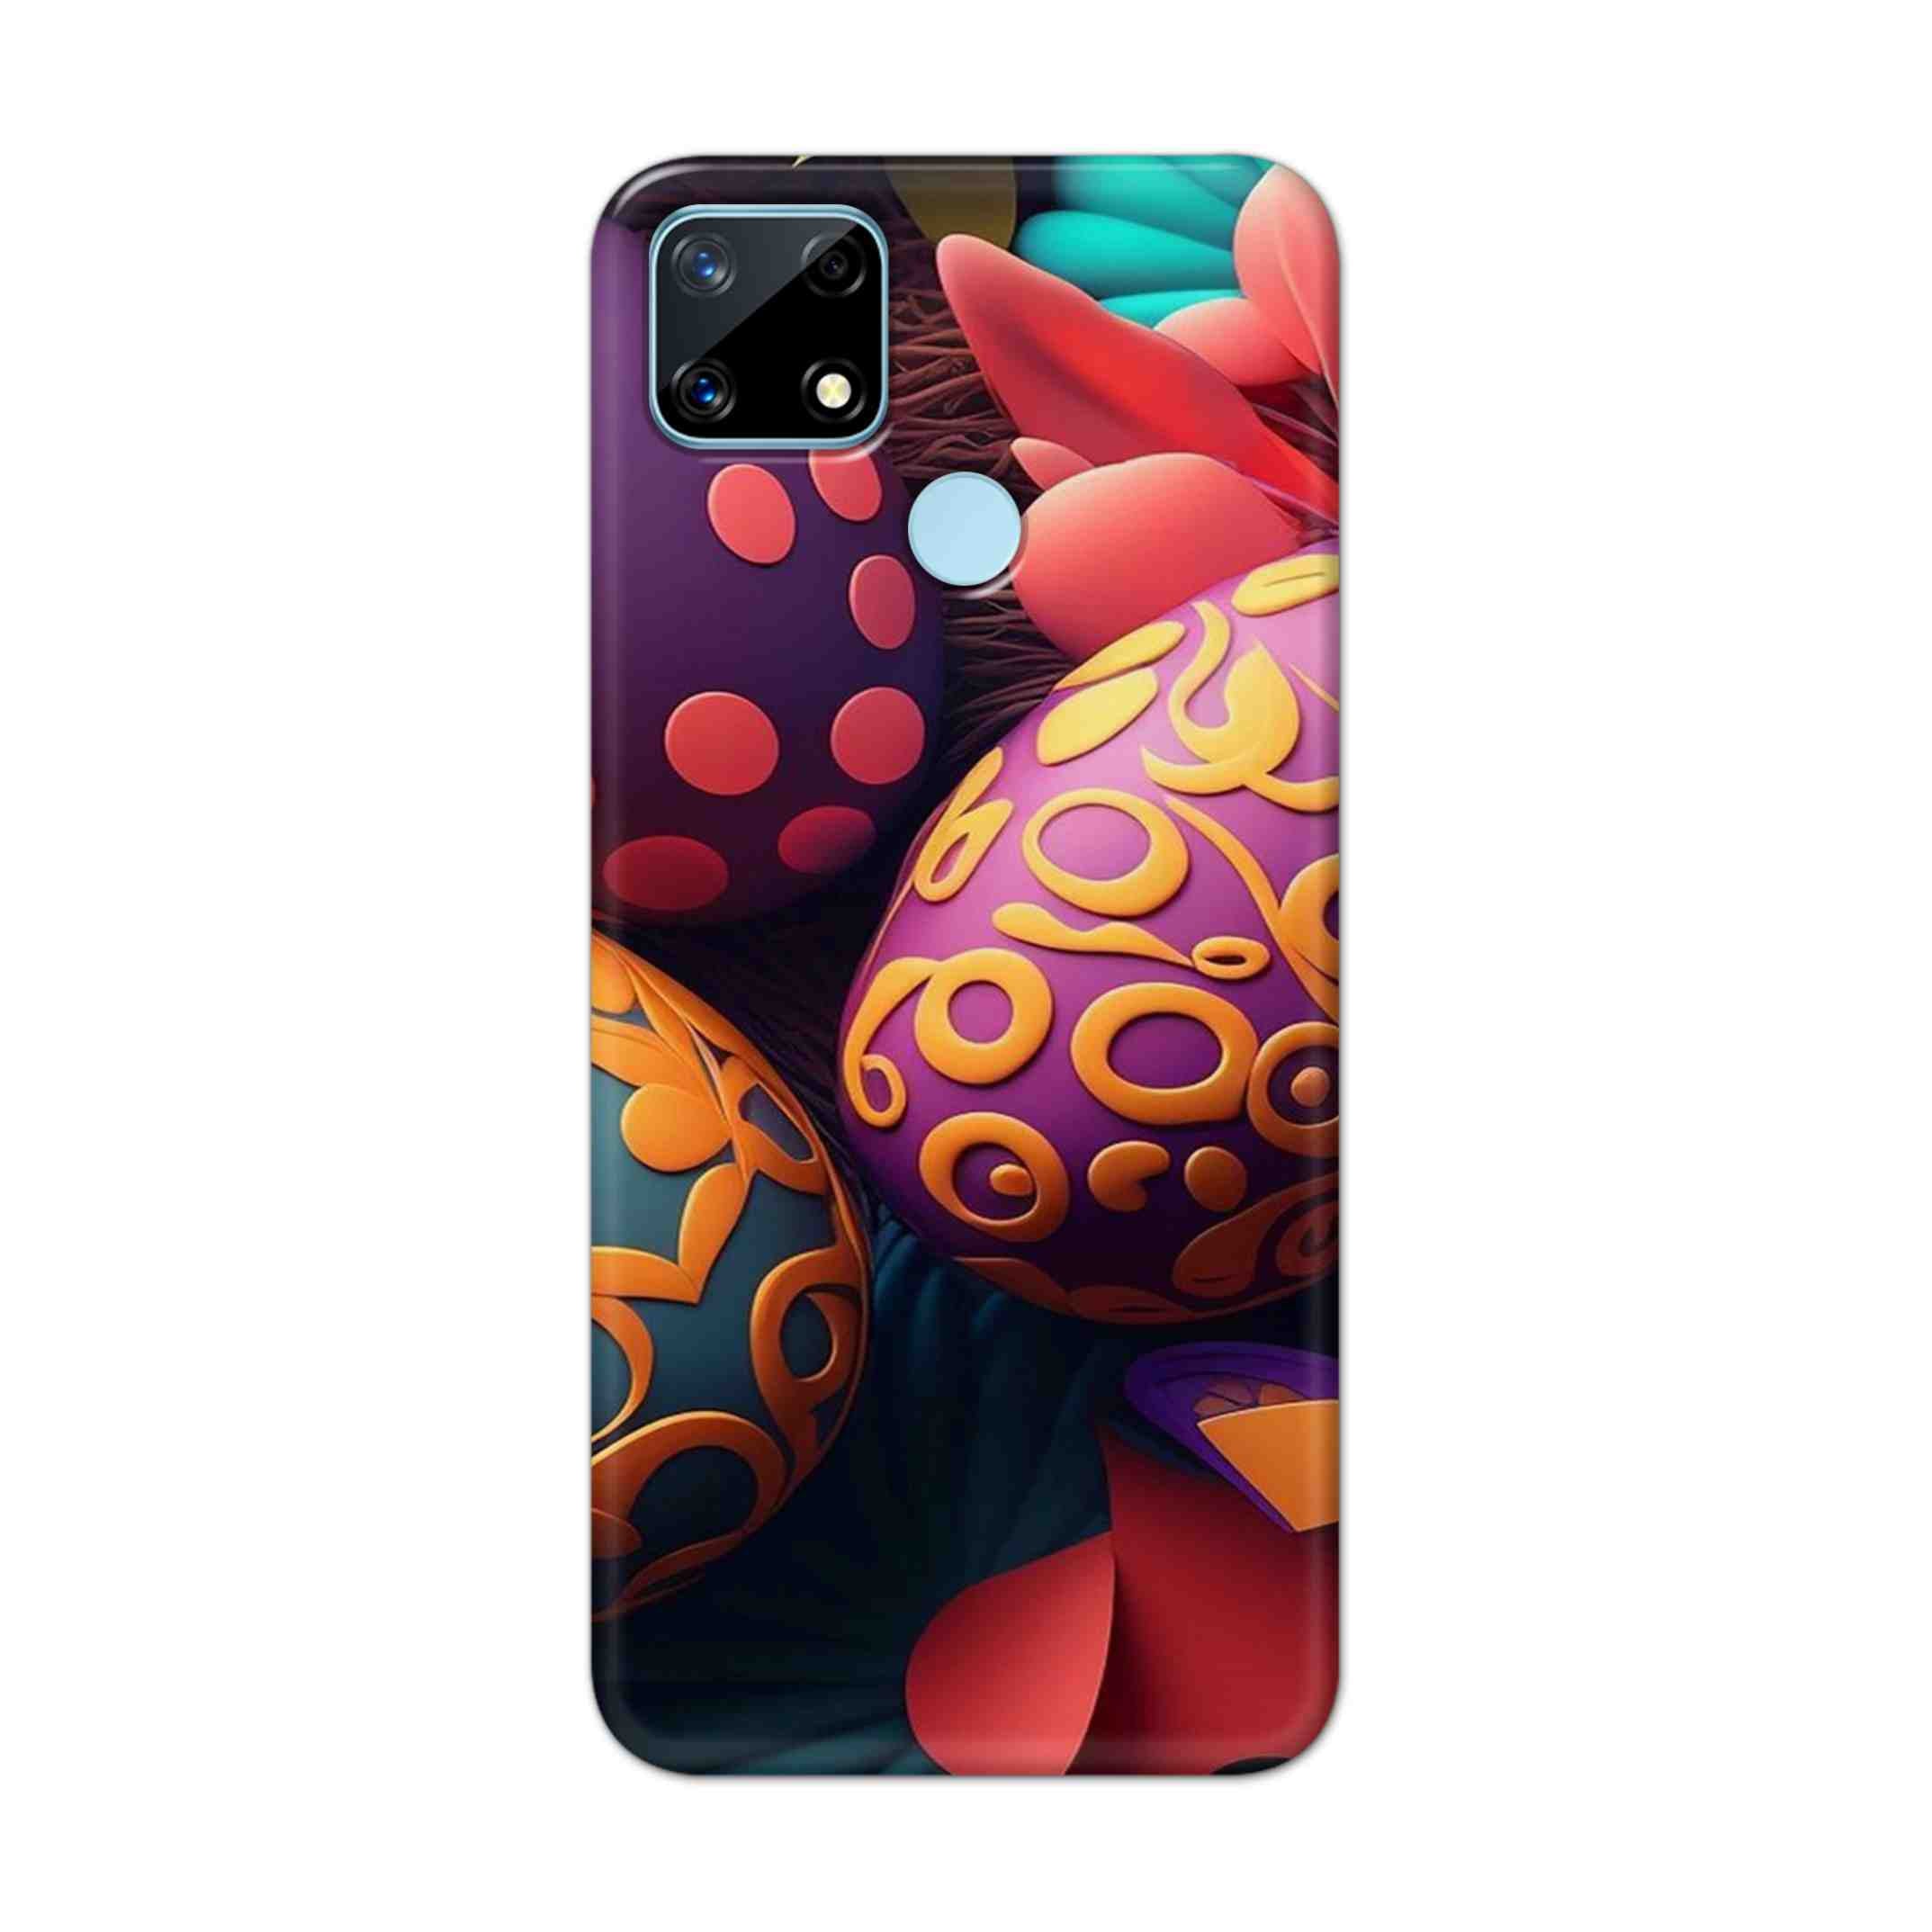 Buy Easter Egg Hard Back Mobile Phone Case Cover For Realme Narzo 20 Online